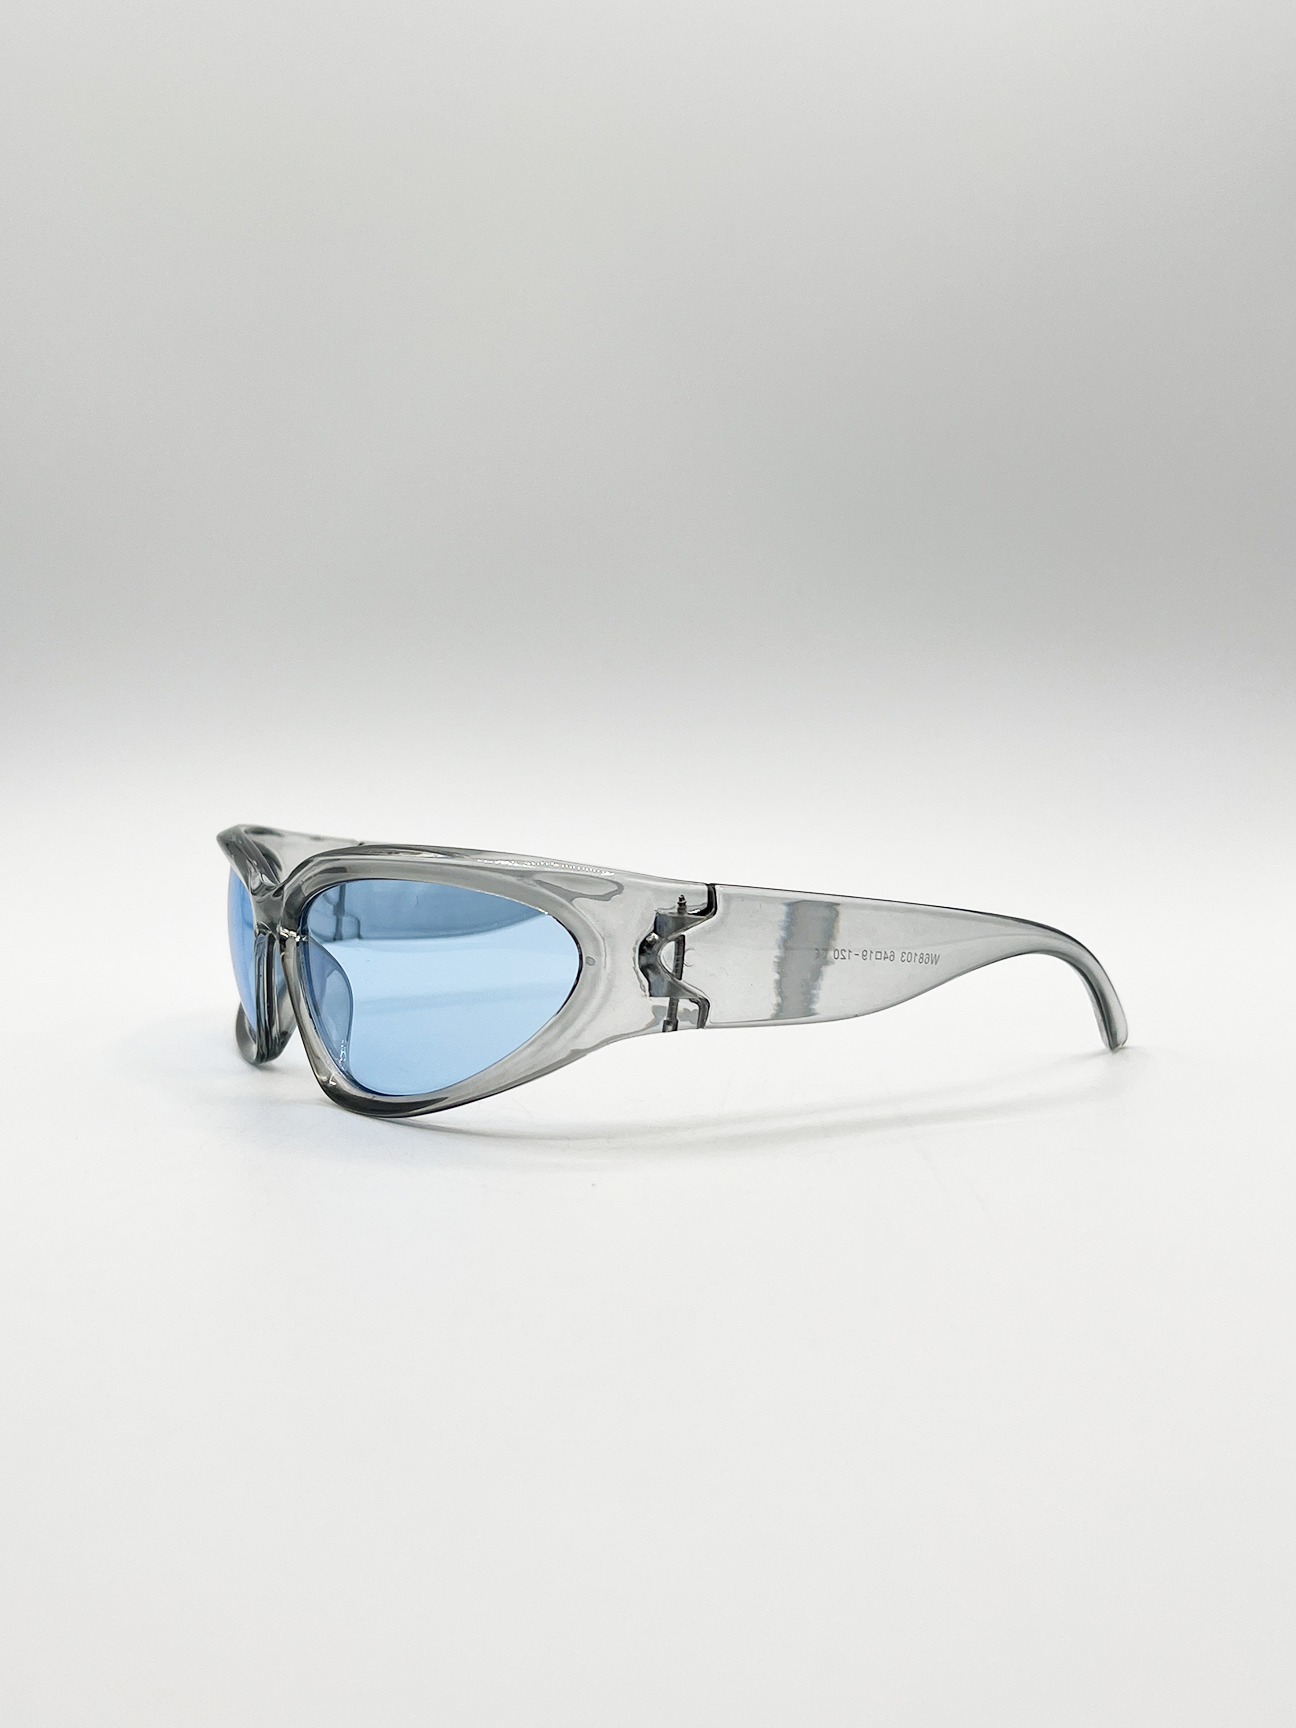 Wrap Around Racer Sunglasses in Translucent Blue